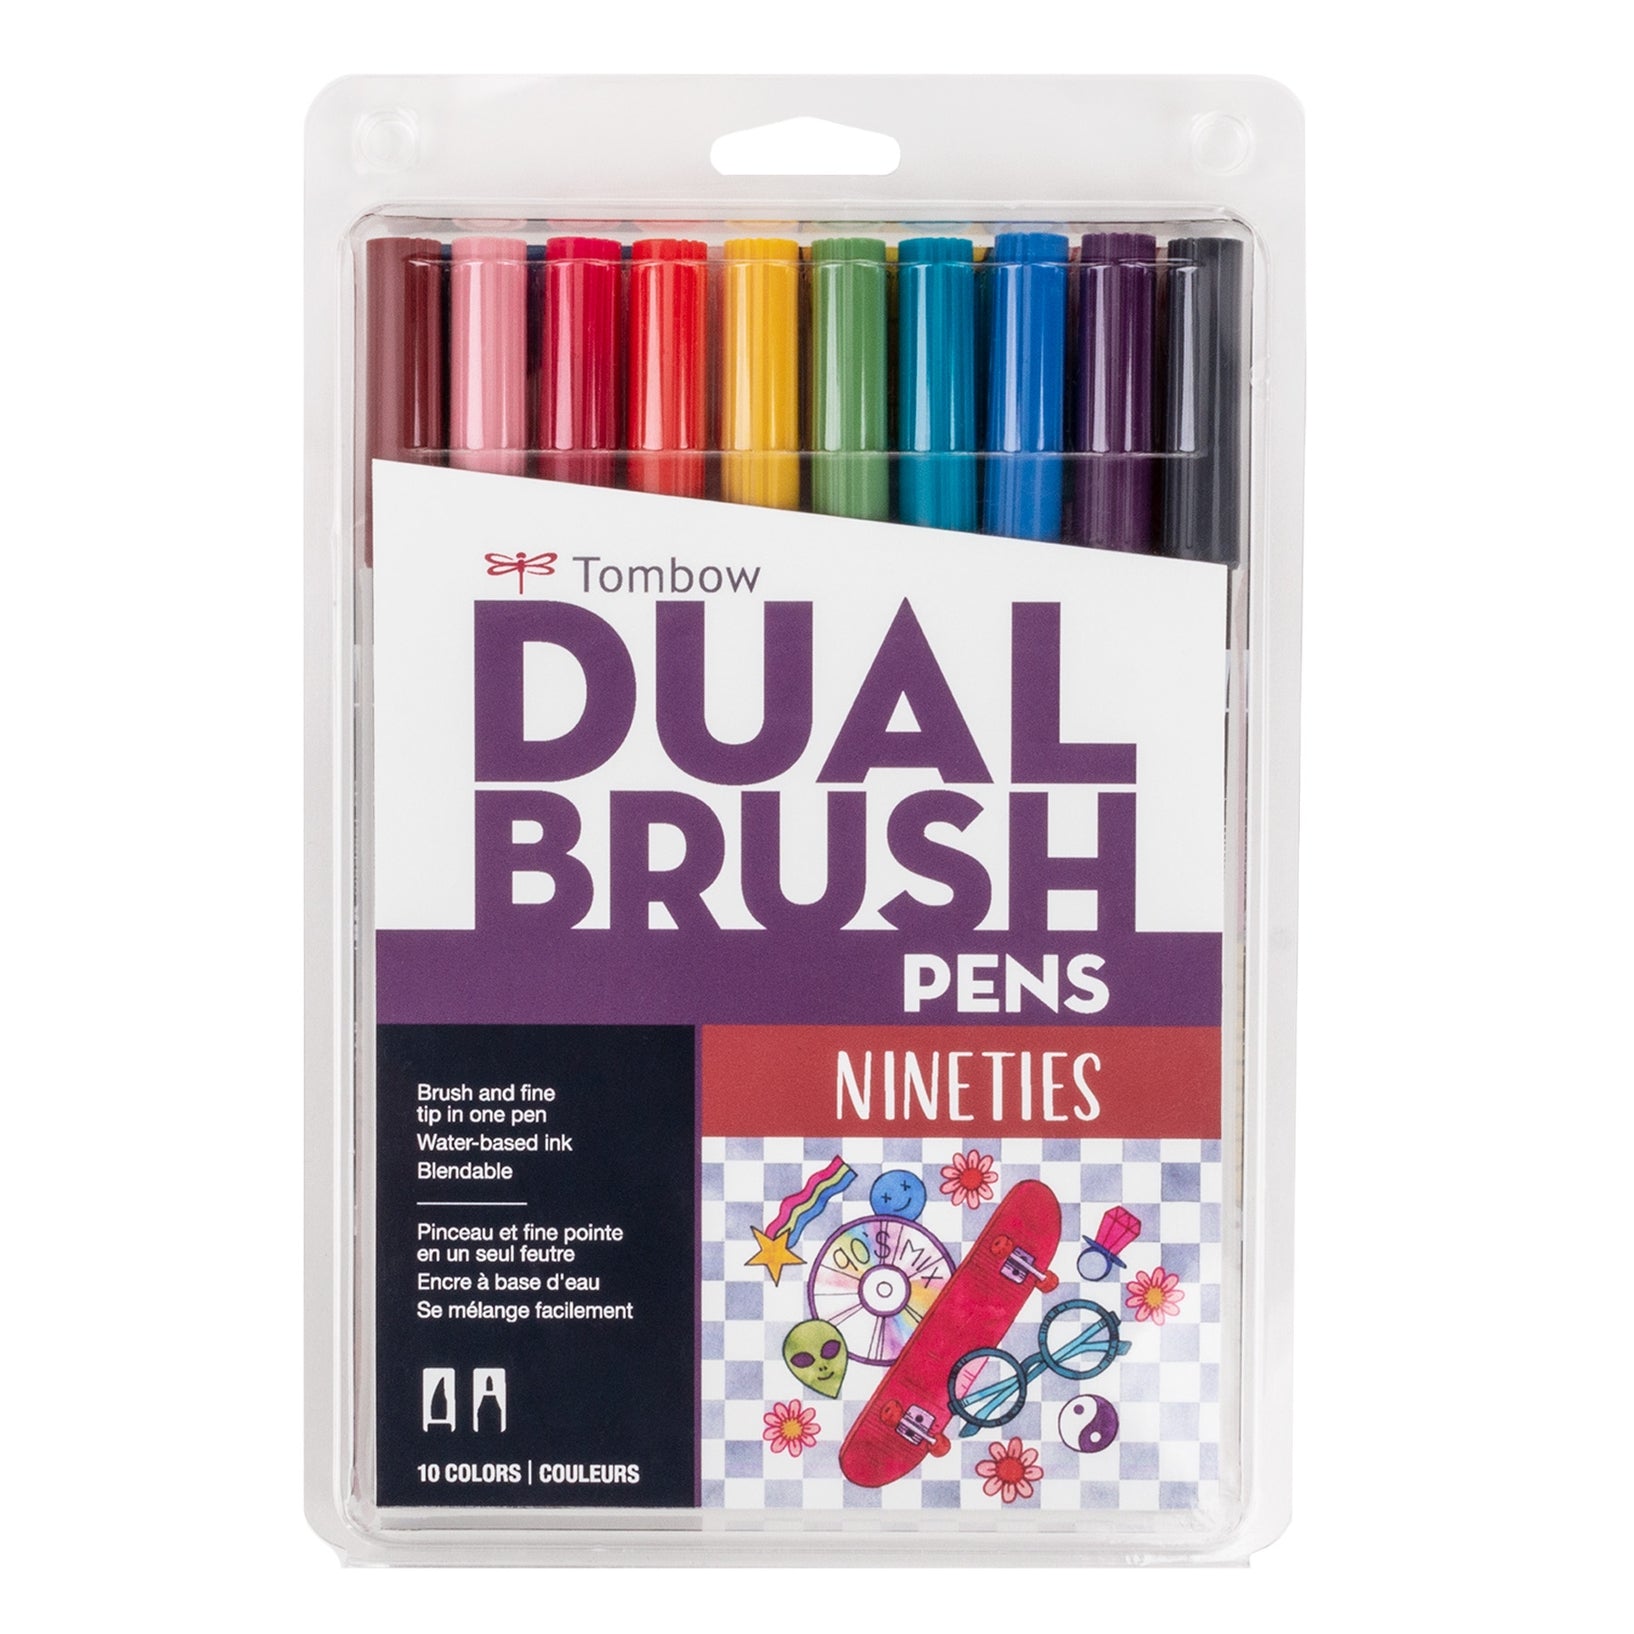 Nineties Tombow Dual Brush Pen Sets - Odd Nodd Art Supply